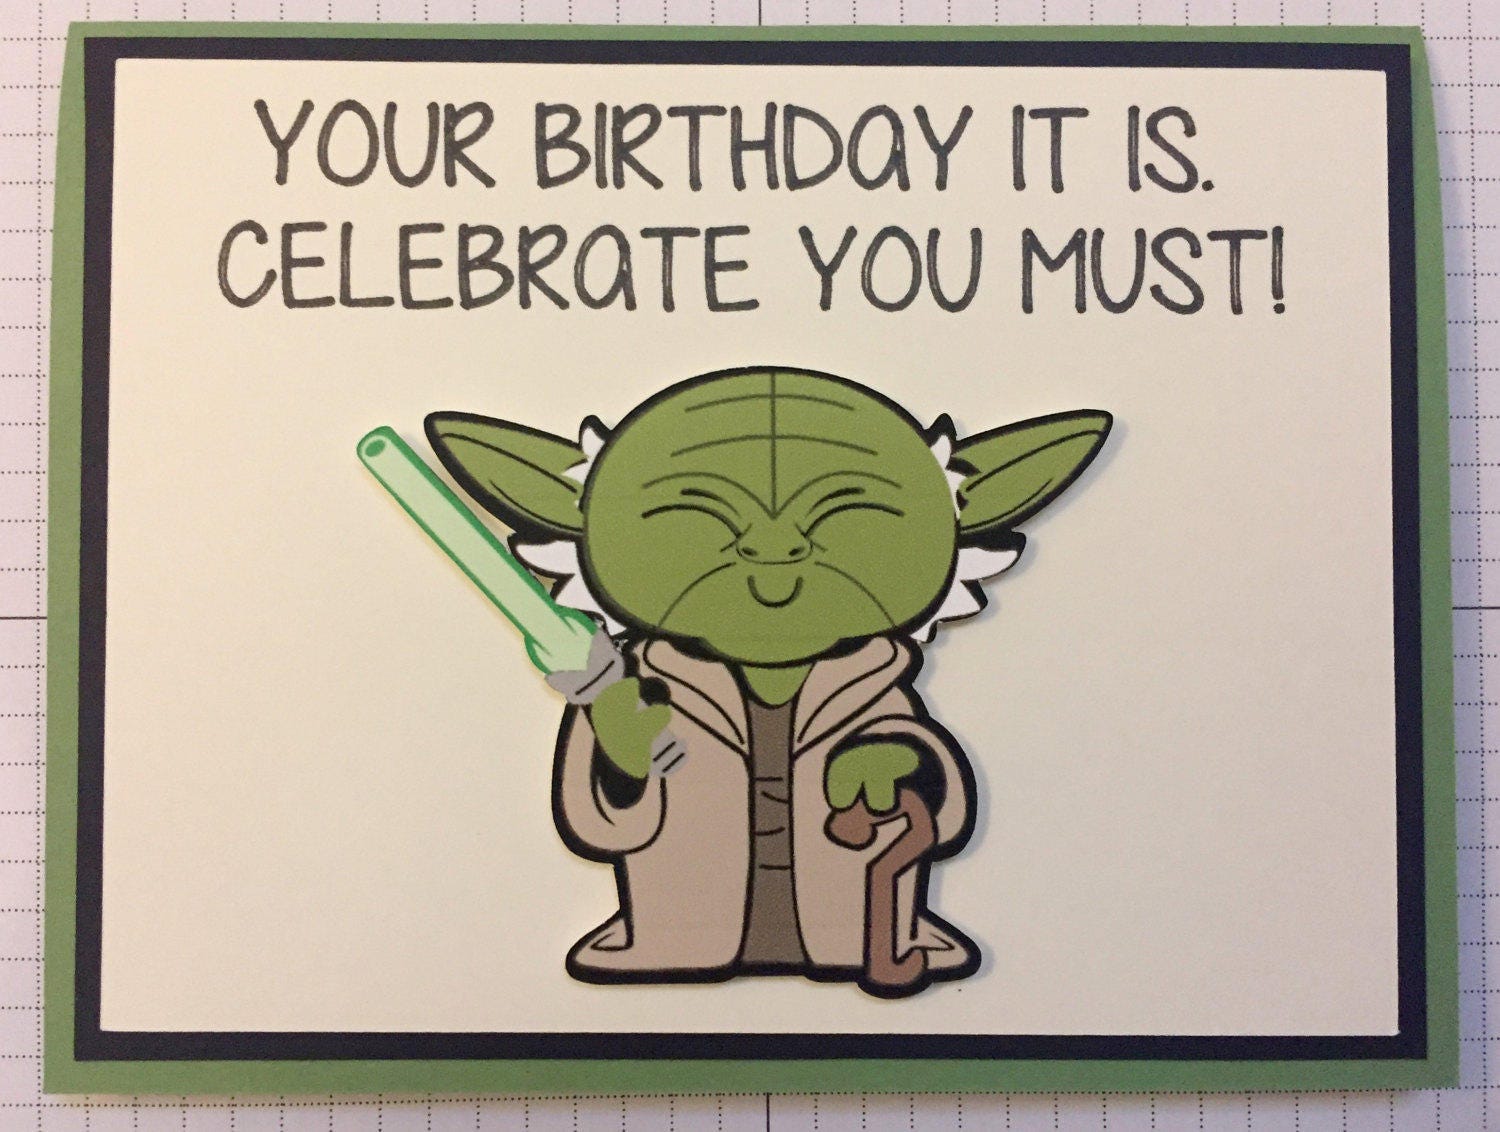 Disney Star Wars Yoda birthday greeting card | Etsy